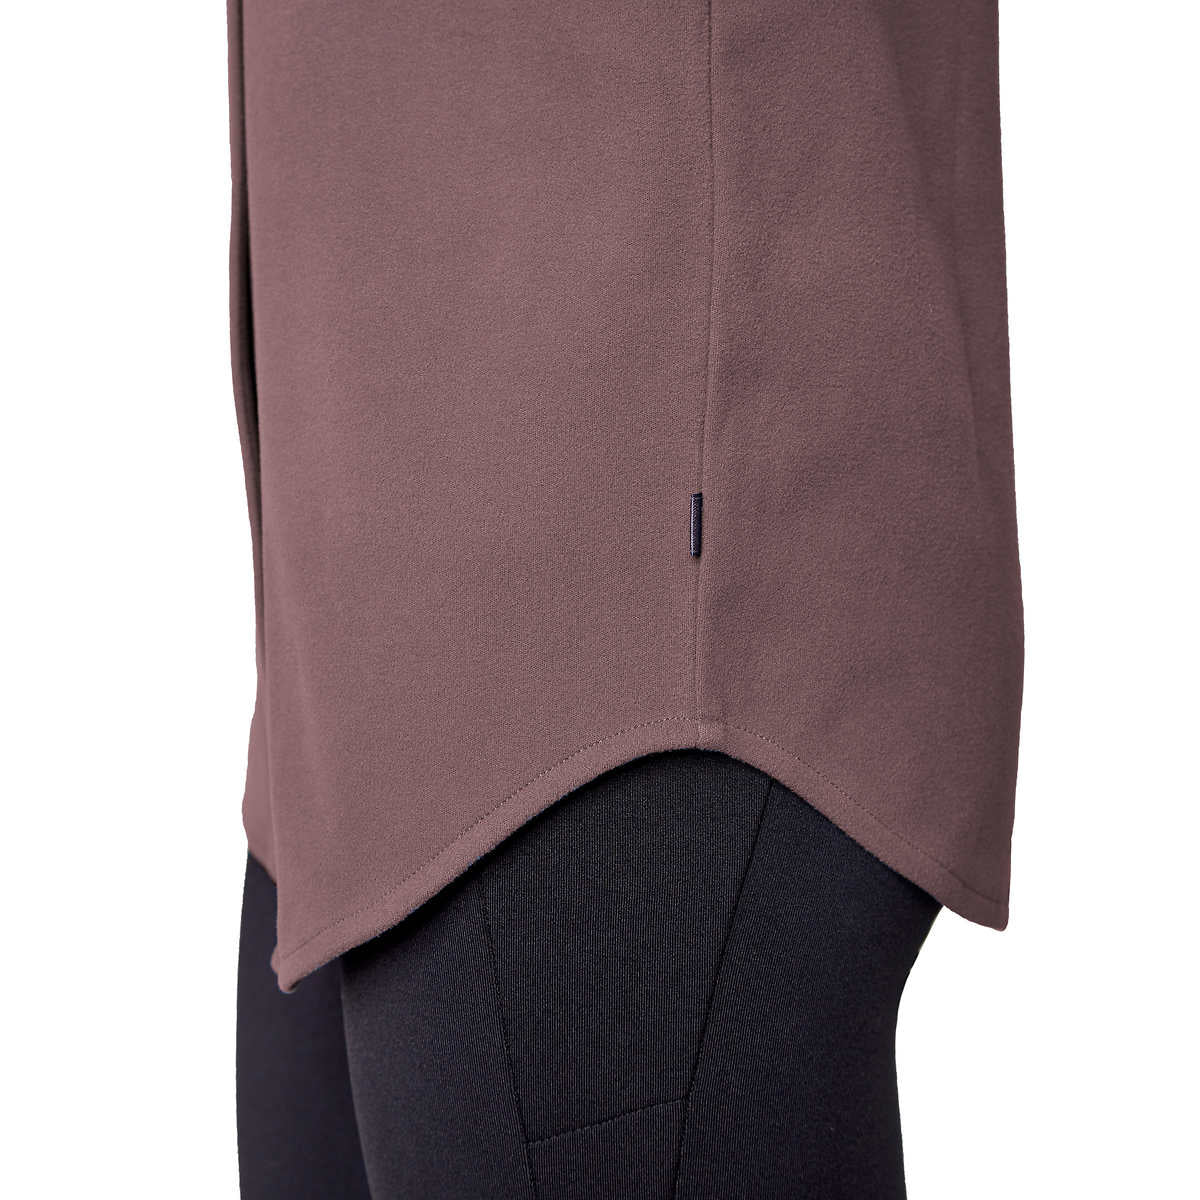 Mondetta Women's Soft Plush Cozy Moisture Wicking Snap Button Up Shirt